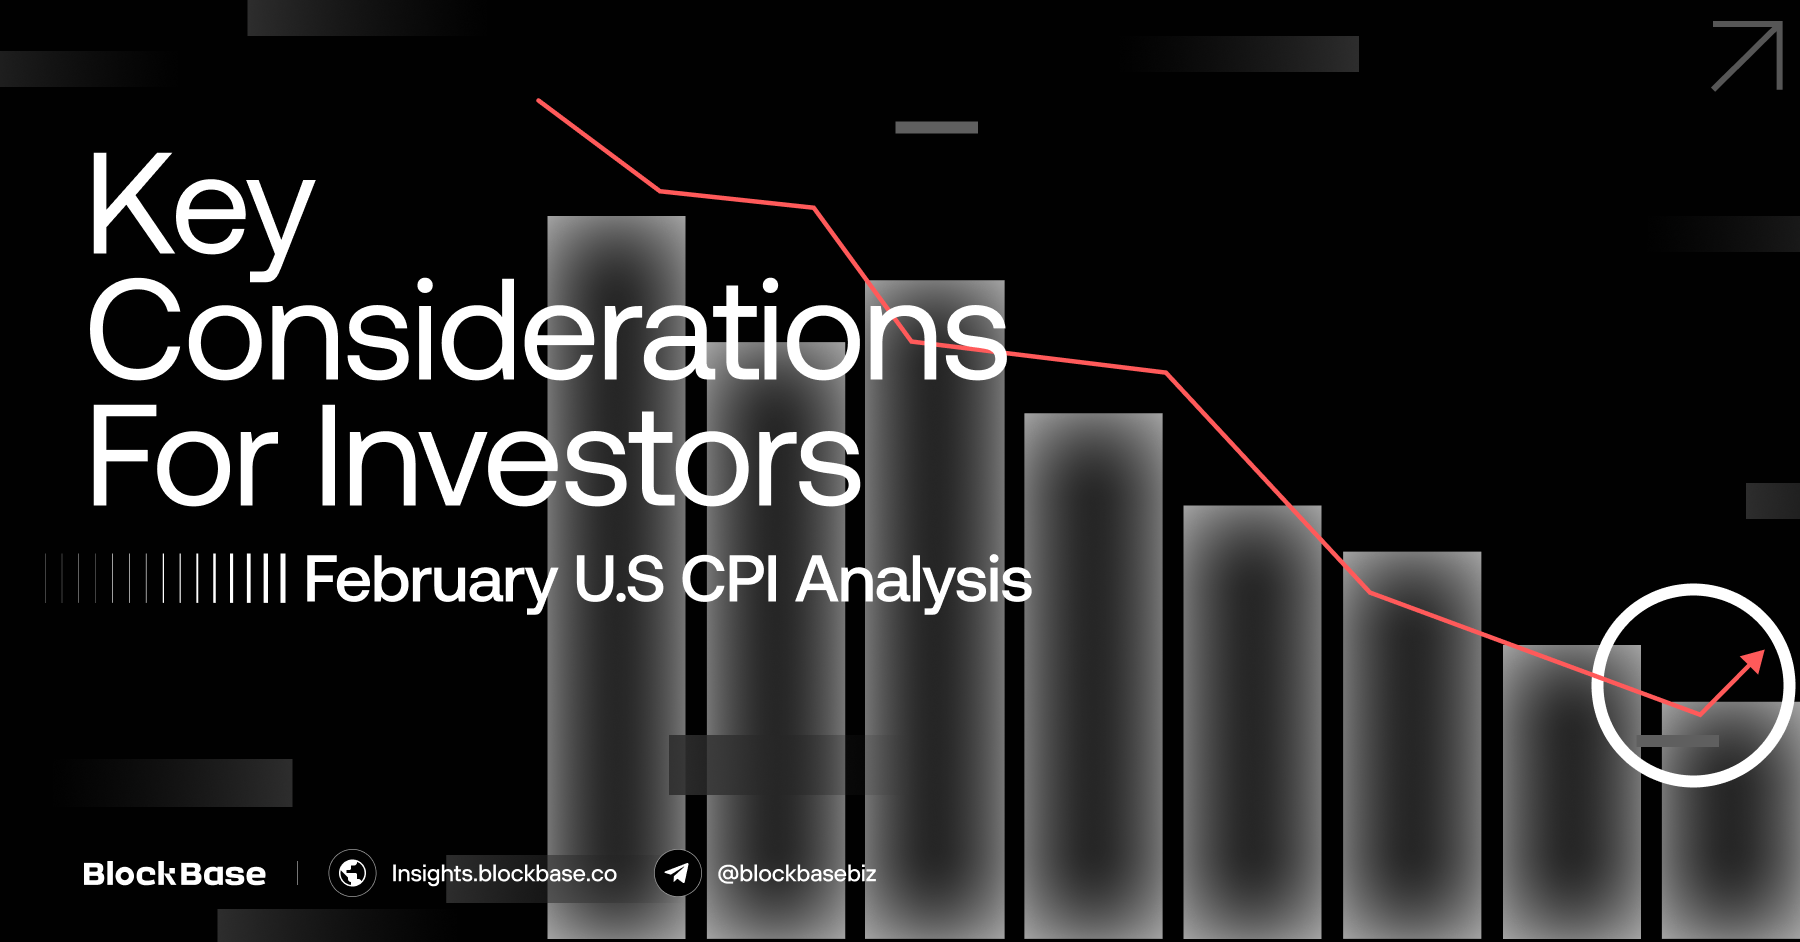 February U.S CPI Analysis – Key Considerations For Investors